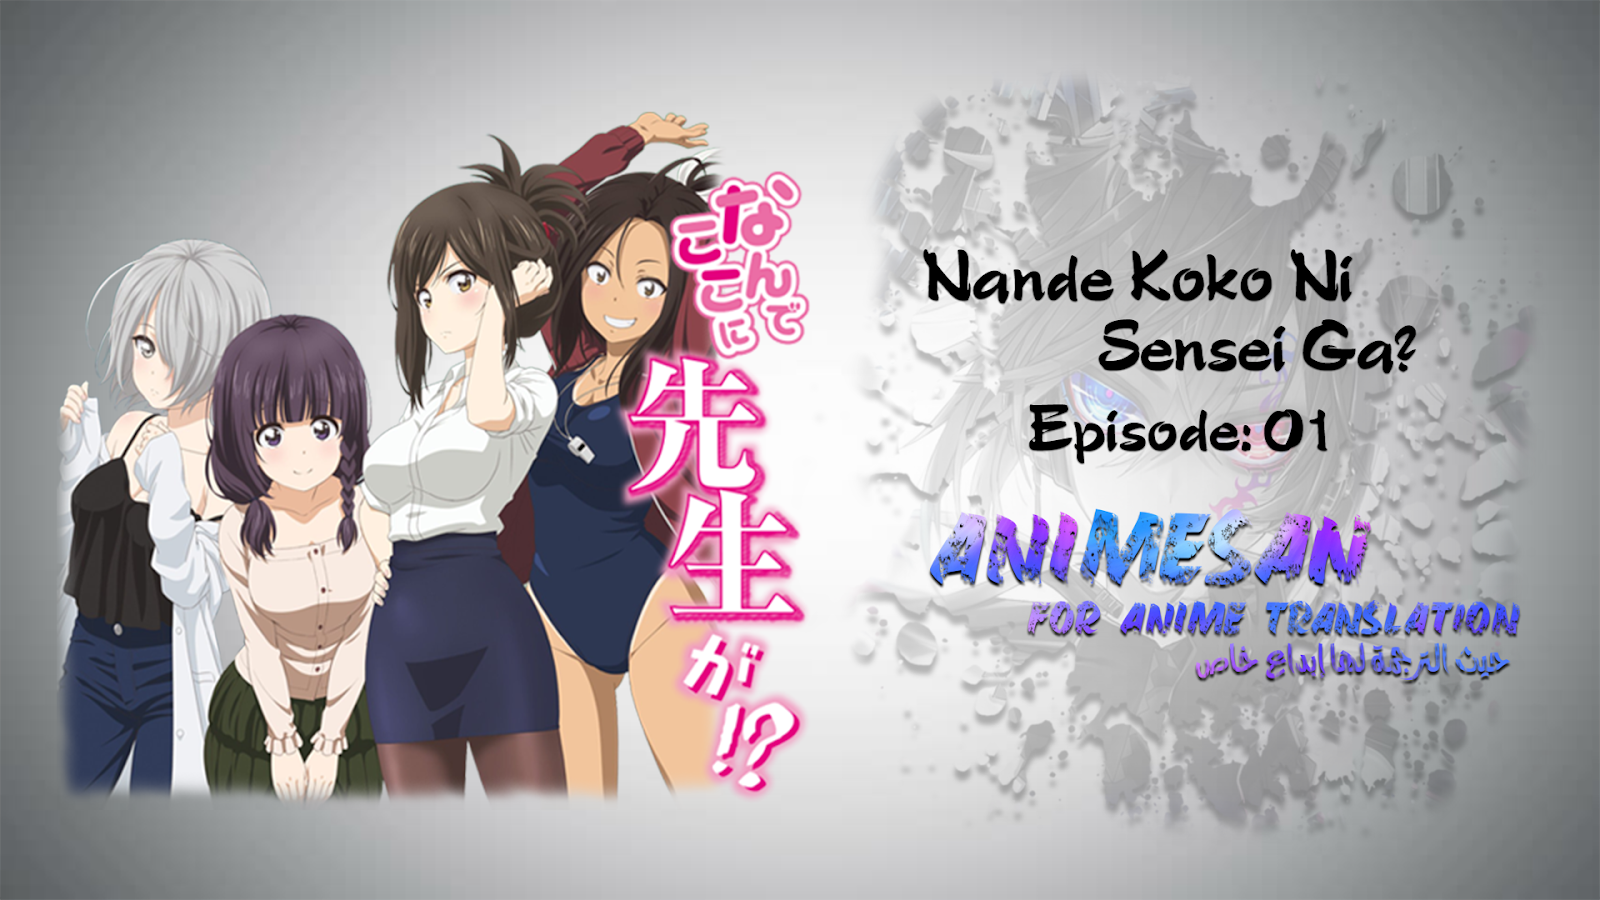 Nande Koko Ni Sensei Ga 01 Less Cencored Animesan For Anime Translation أنمي سان حيث الترجمة لها إبداع خاص